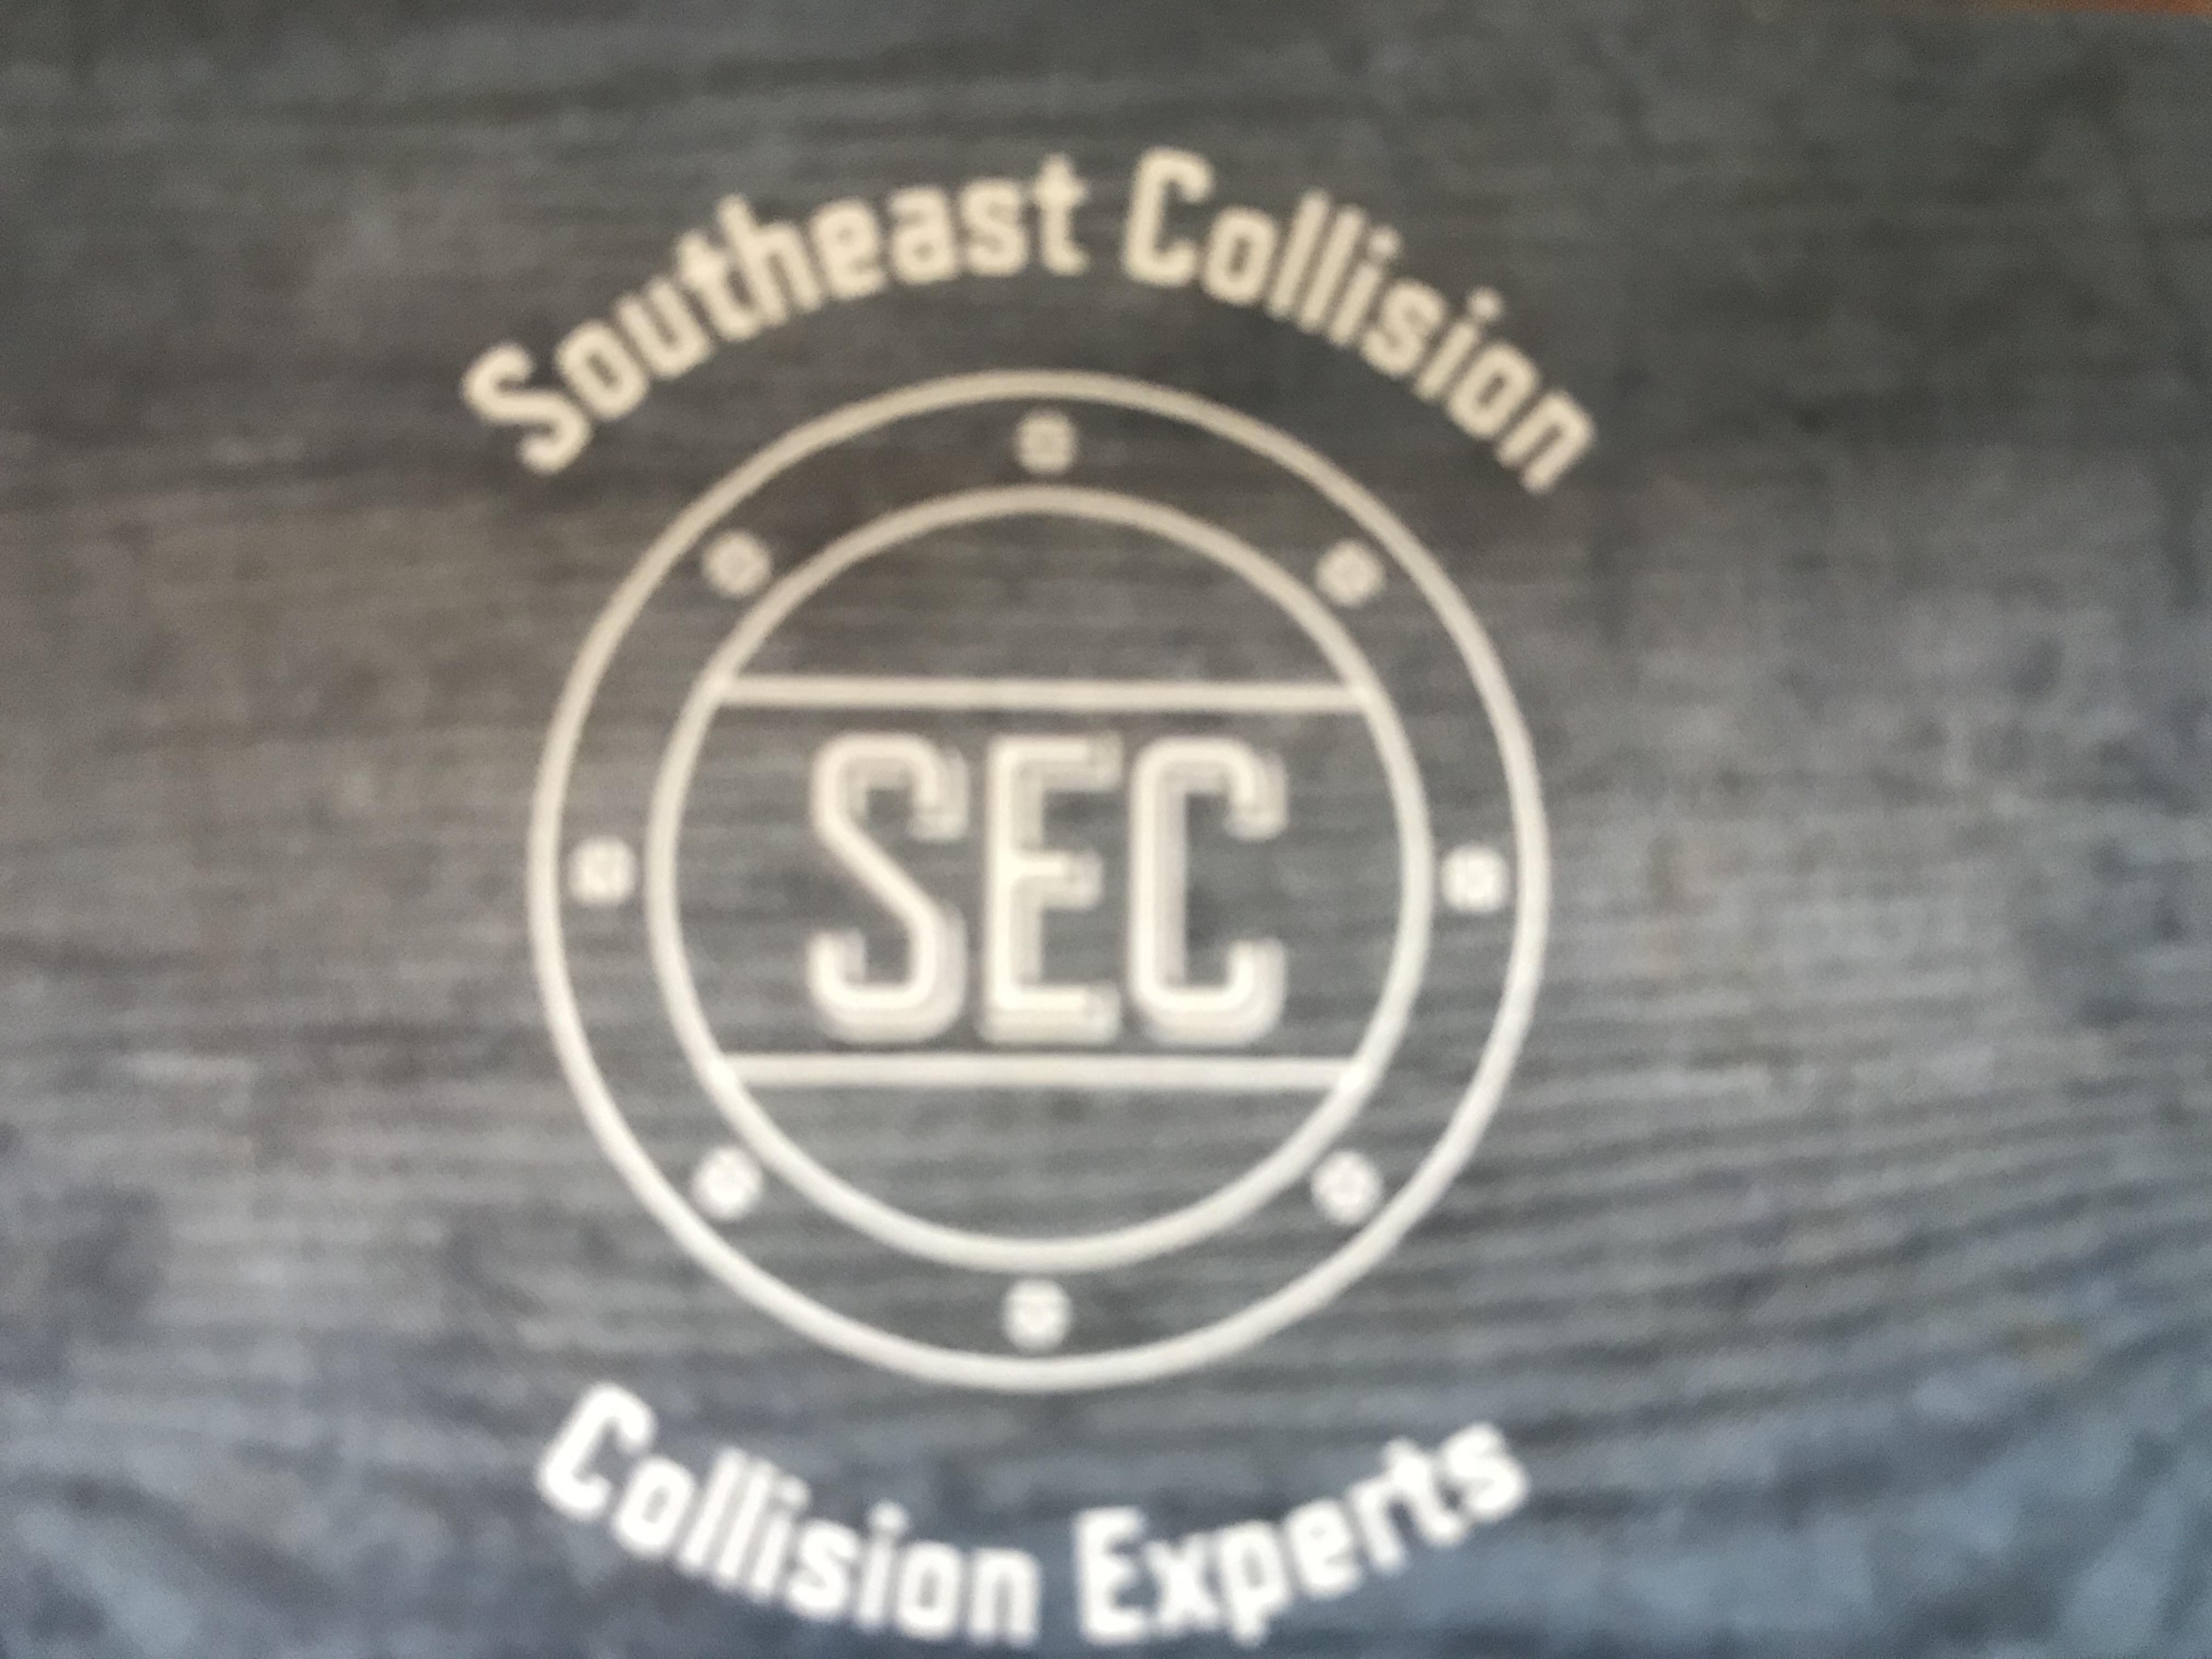 Southeast Collision Center